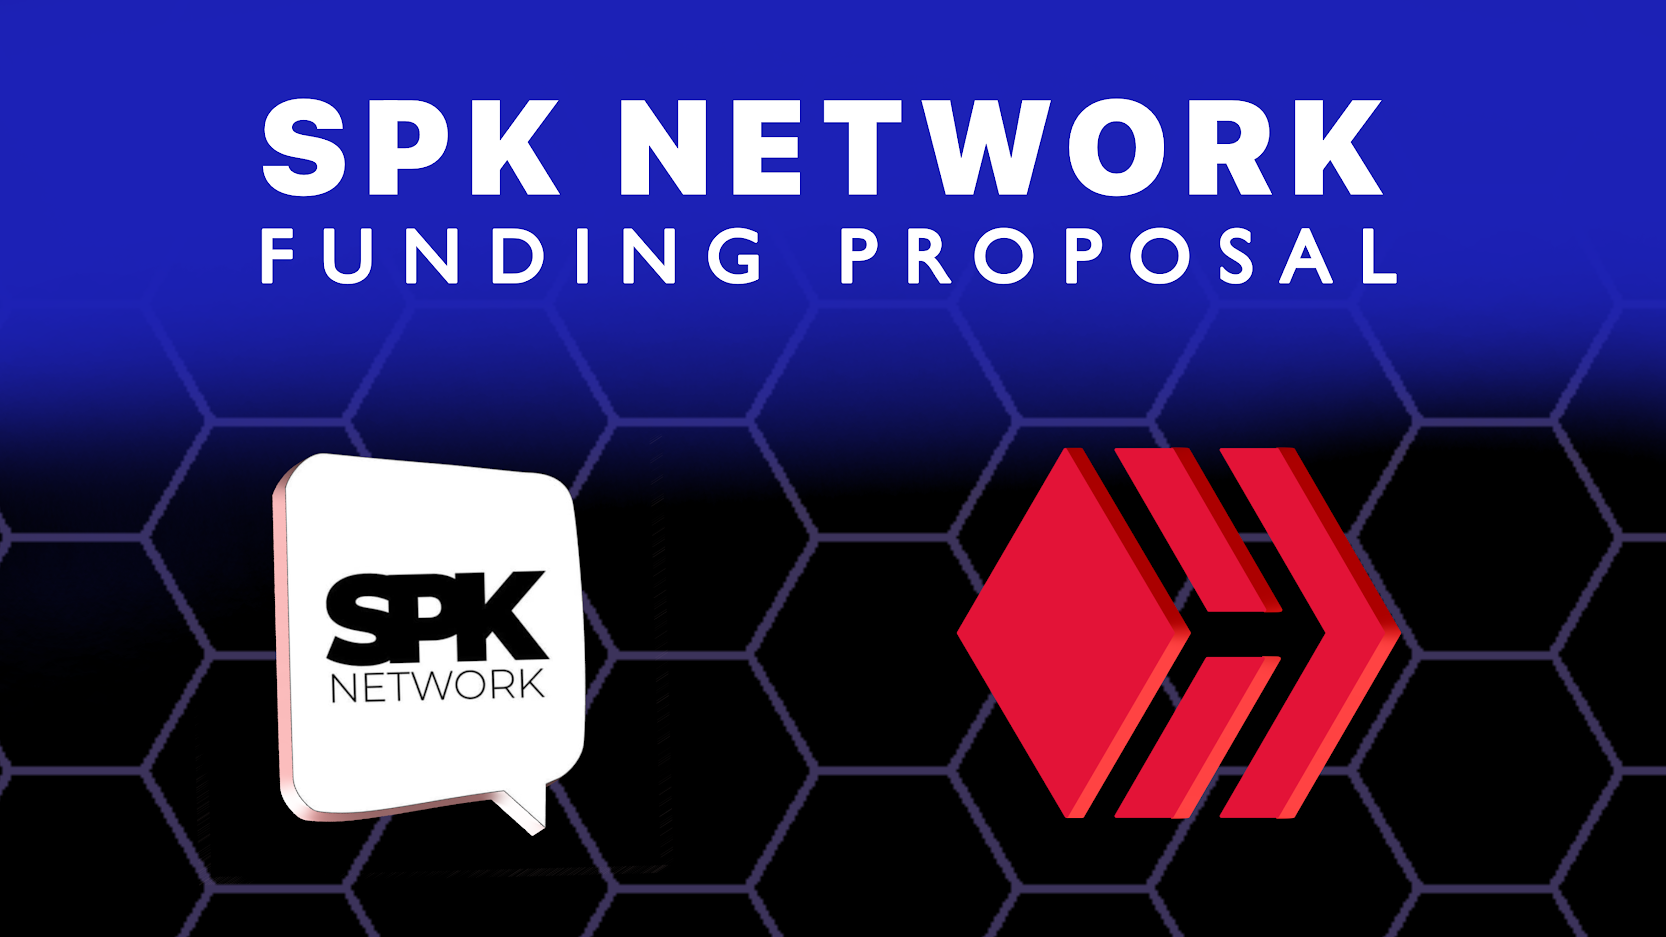 @spknetwork/spk-network-funding-proposal-rhnv7e